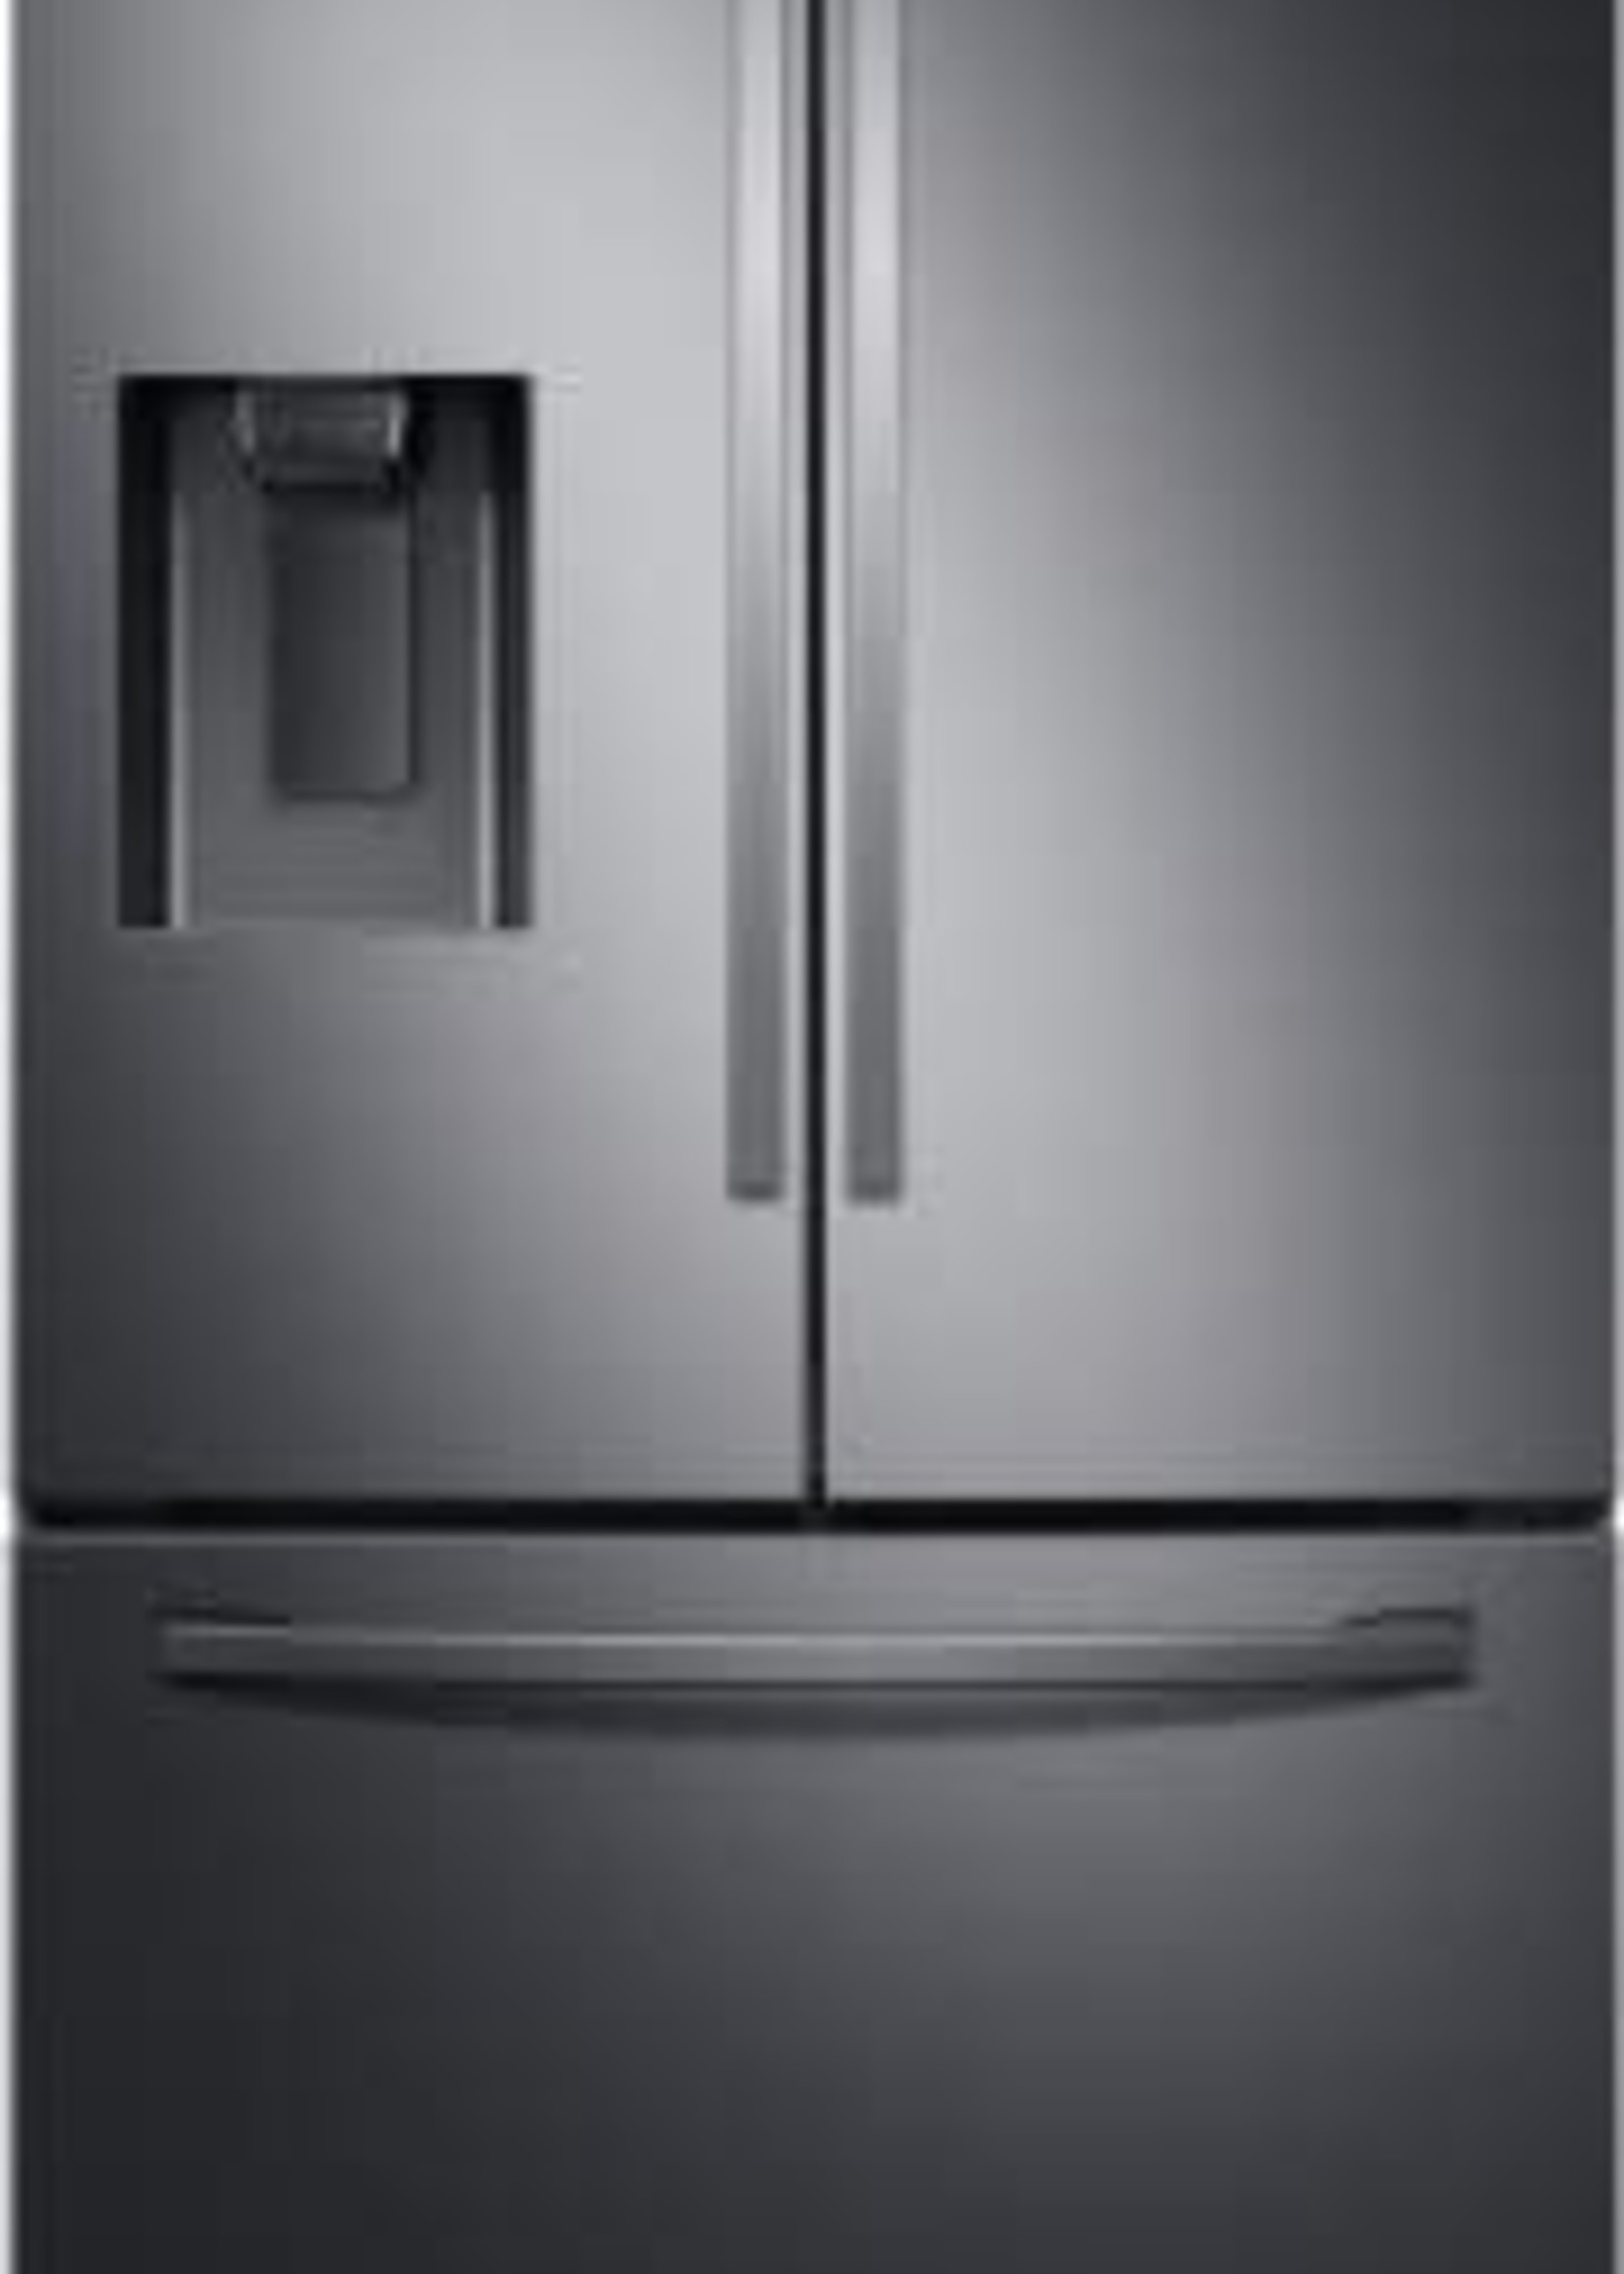 Samsung *Samsung  RF27T5201SG  27-cu ft French Door Refrigerator with Ice Maker (Fingerprint Resistant Black Stainless Steel) ENERGY STAR